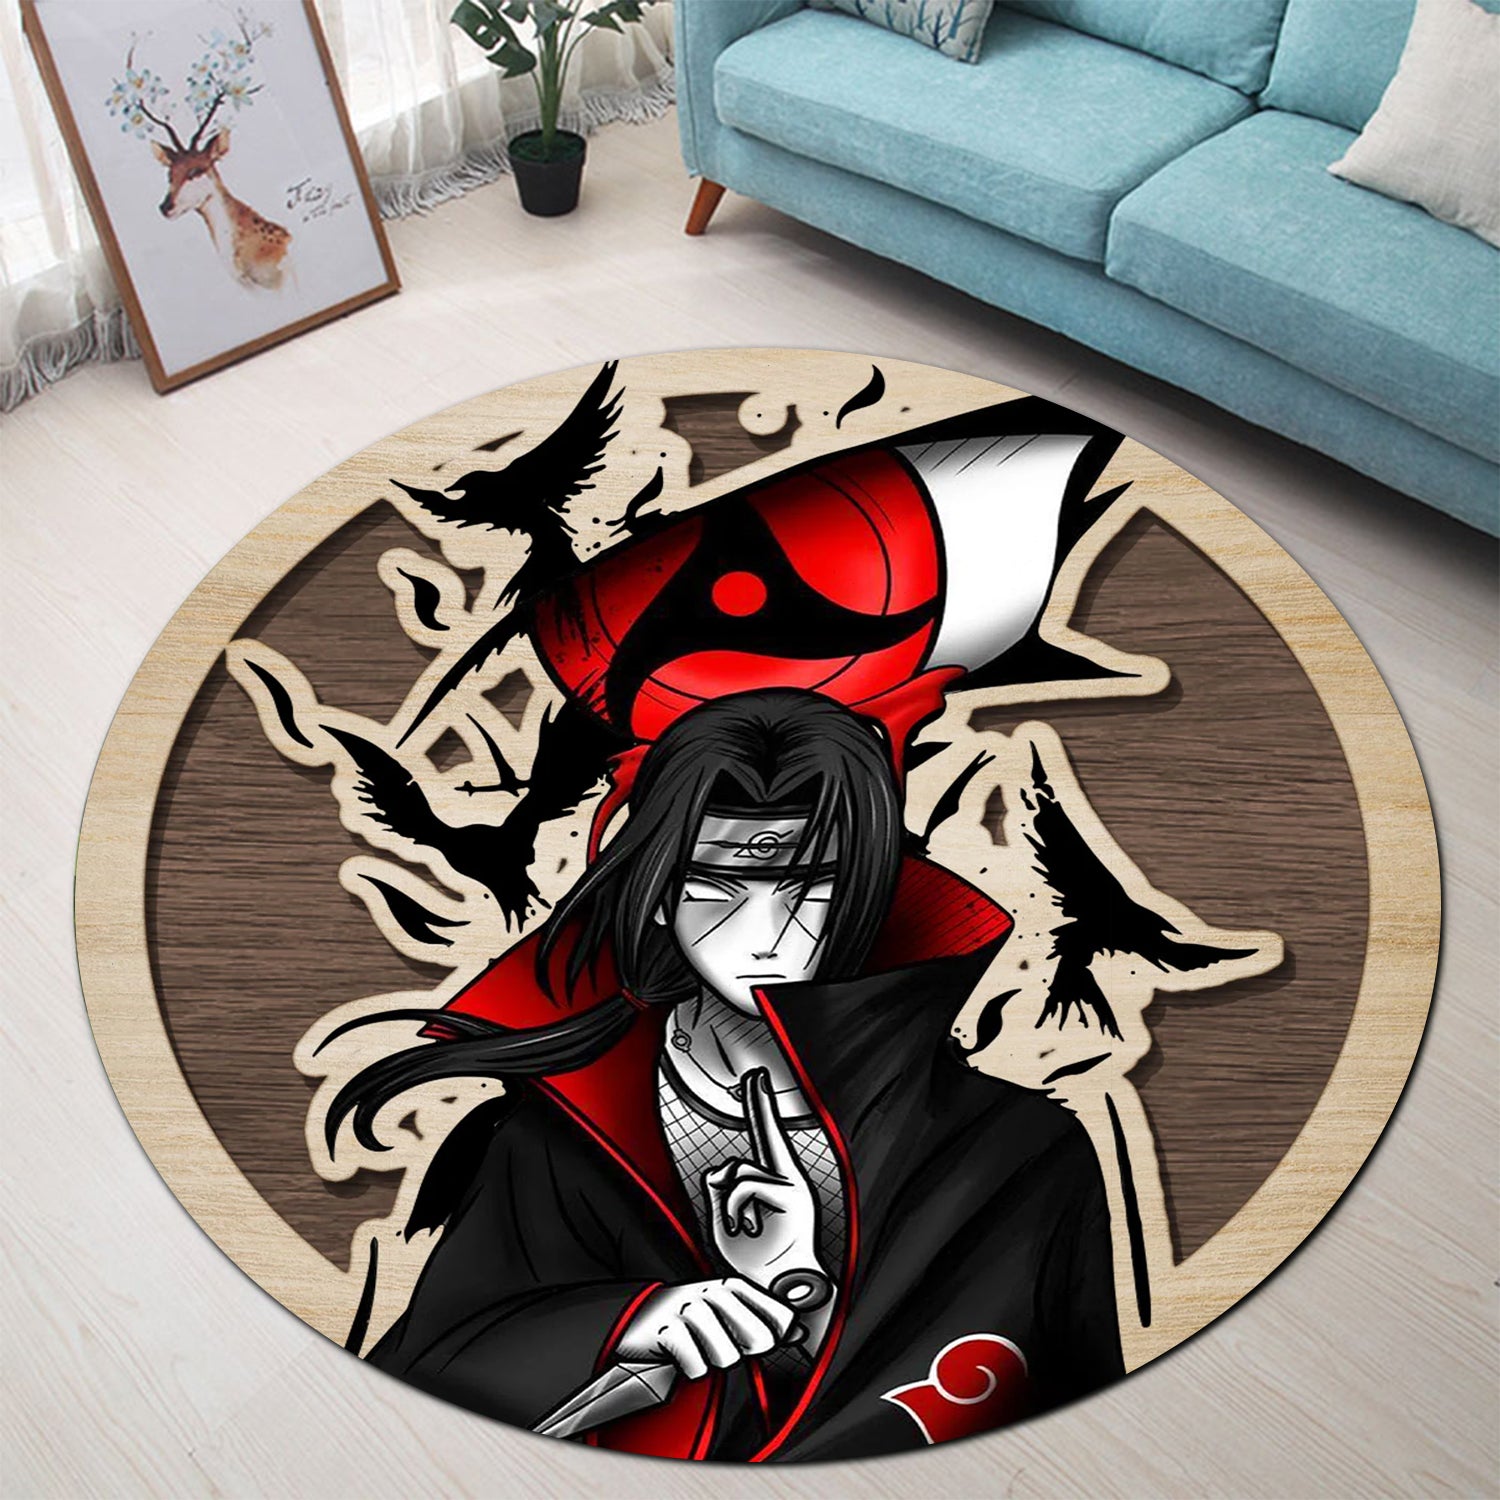 Naruto Itachi Uchiha Round Carpet Rug Bedroom Livingroom Home Decor Nearkii